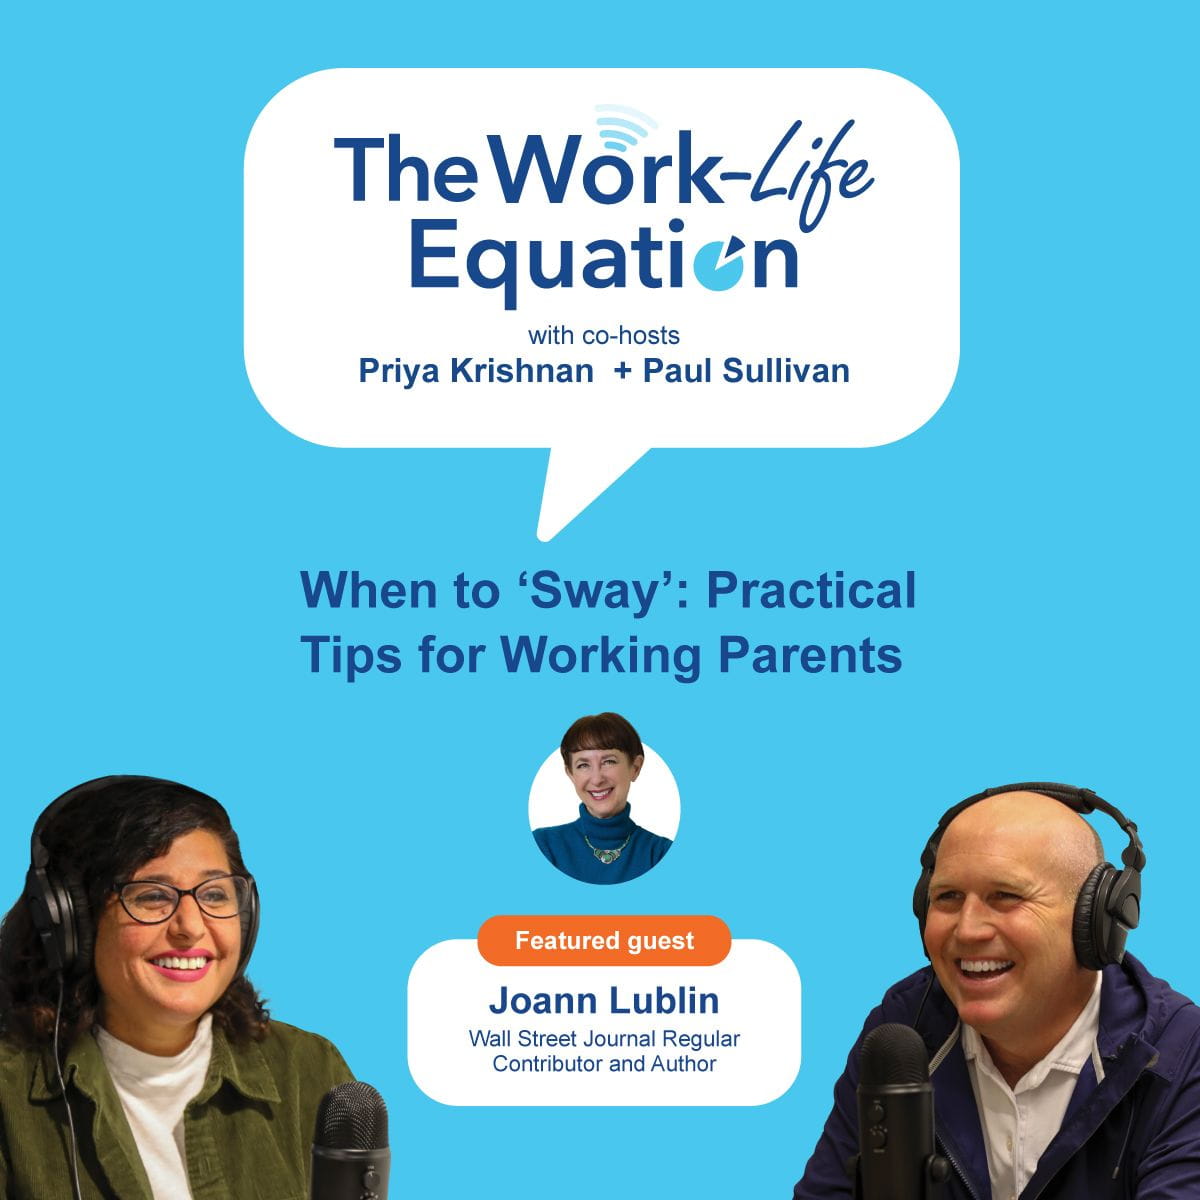 Joann Lublin joins Priya and Paul on The Work-Life Equation